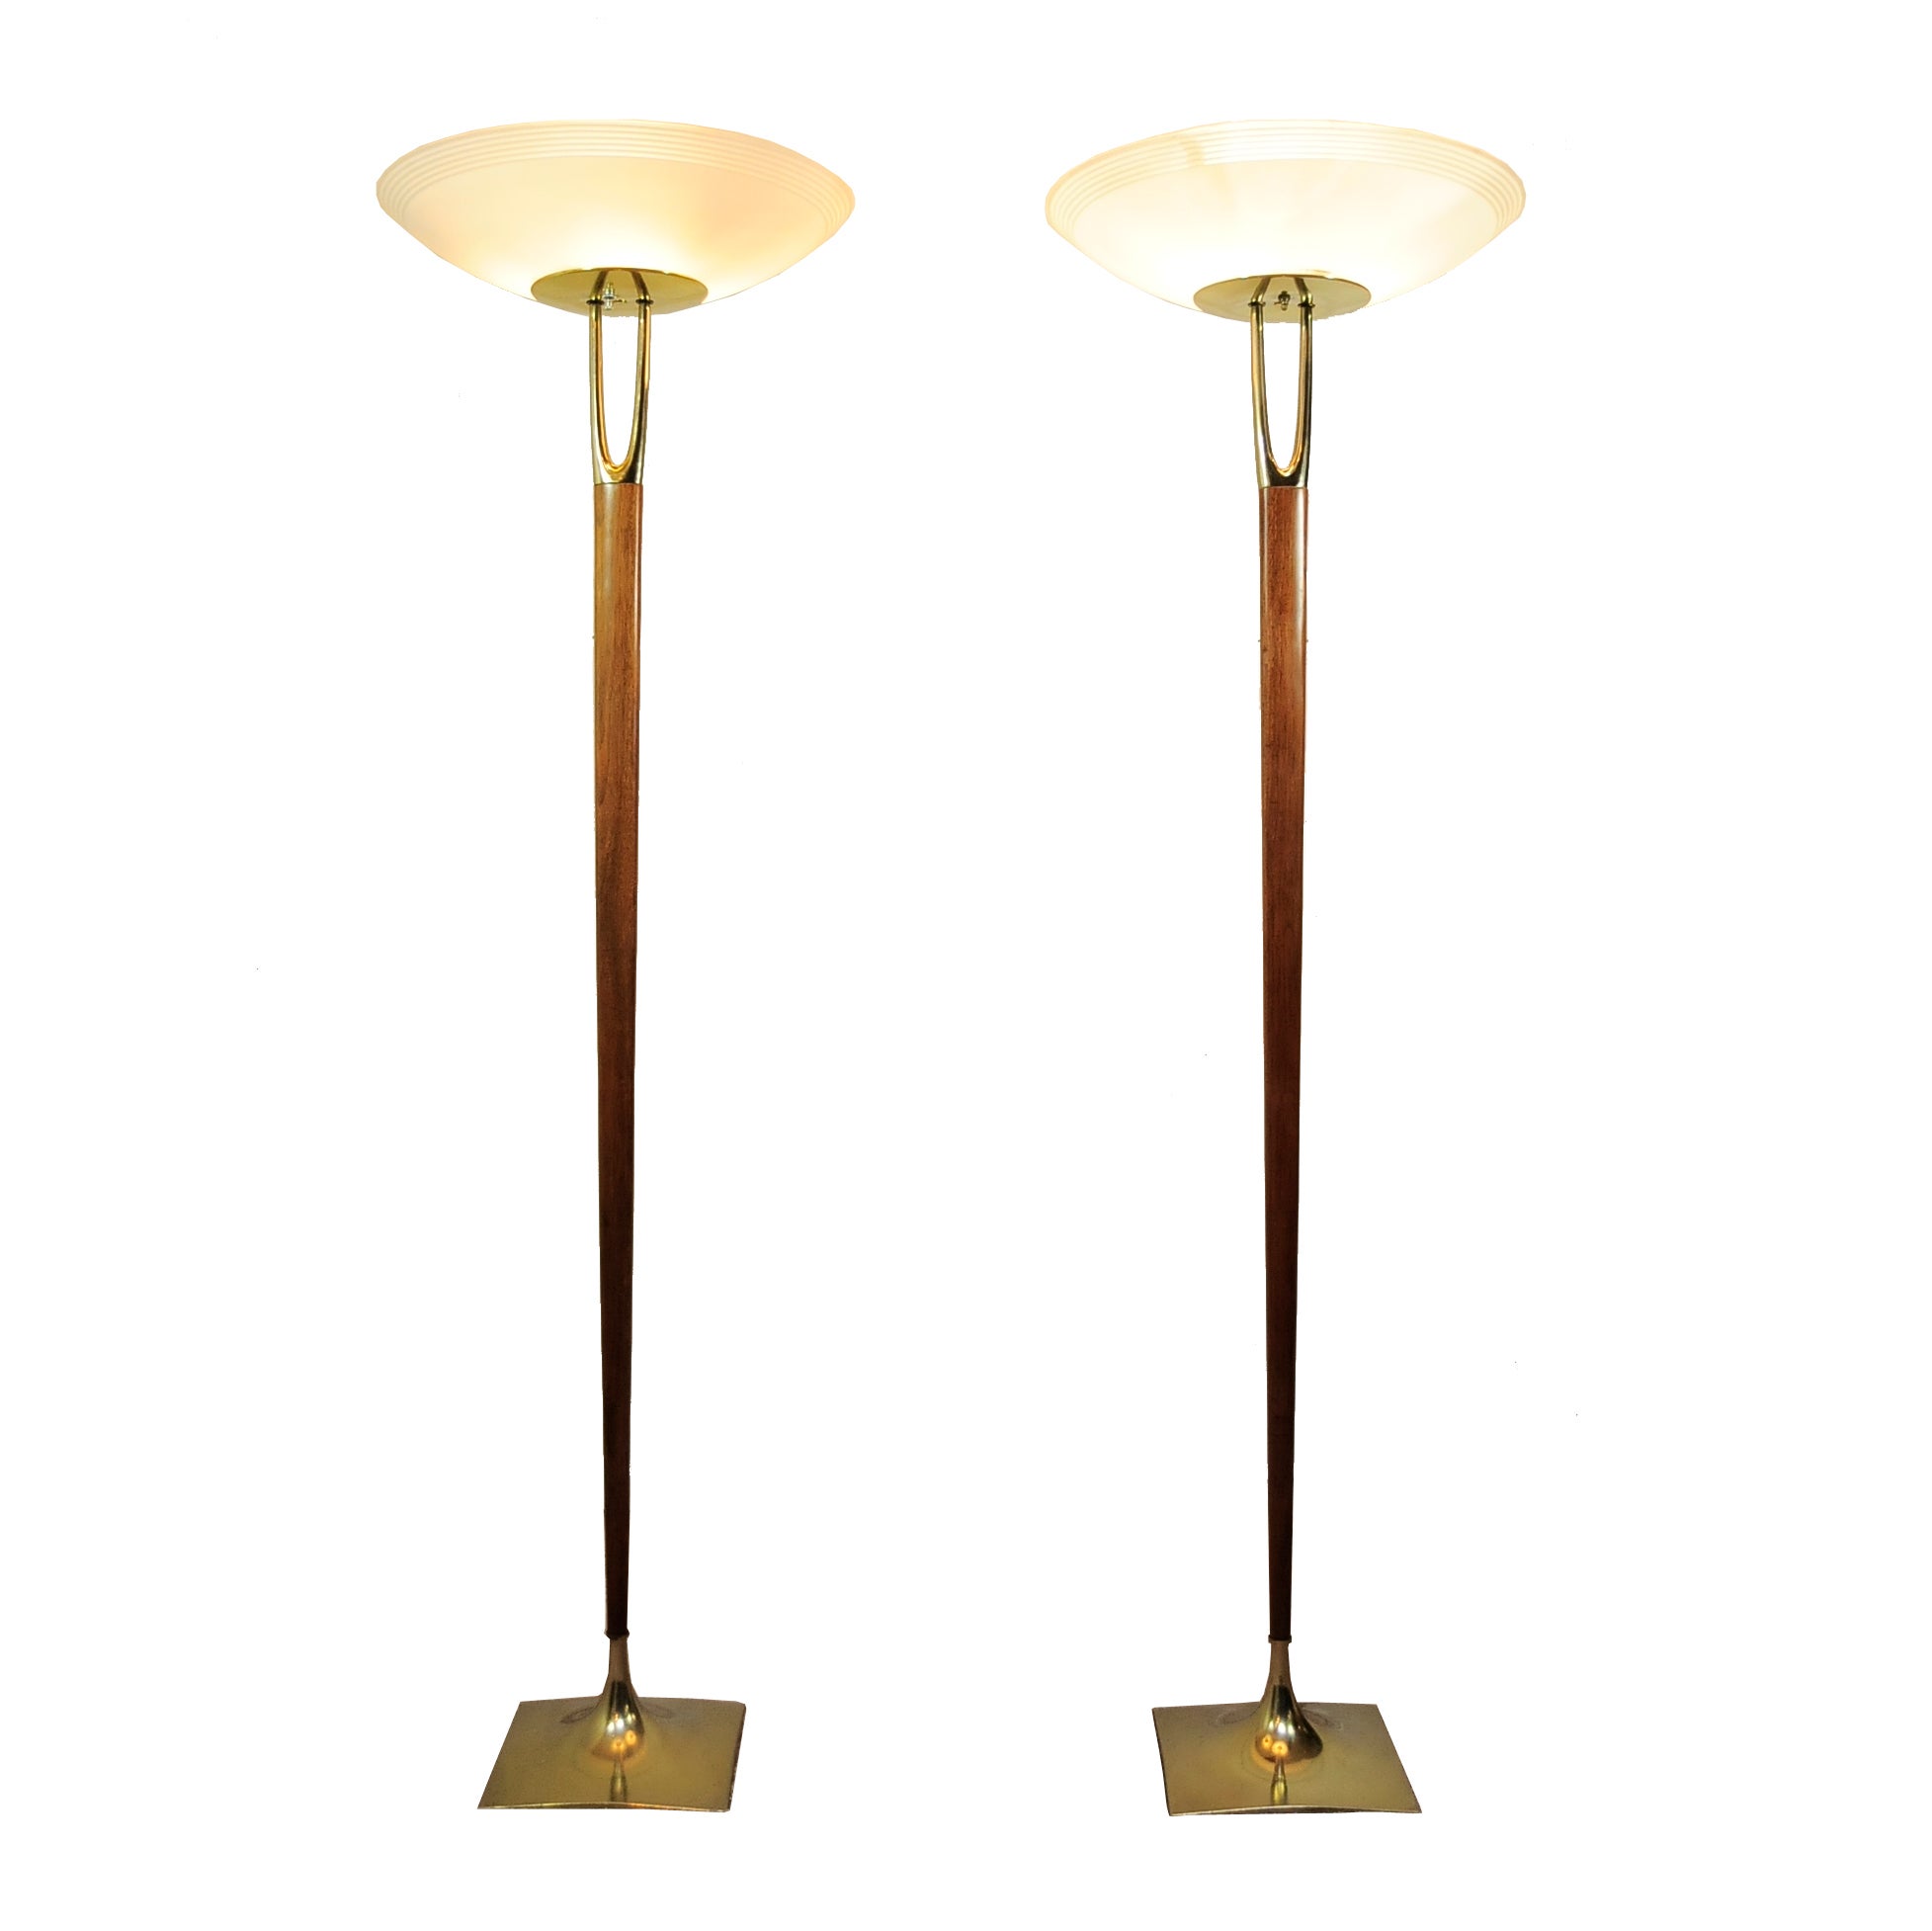 Pair of Laurel Brass Wishbone & Wood Torchiere Floor Lamps - Tulip Bases